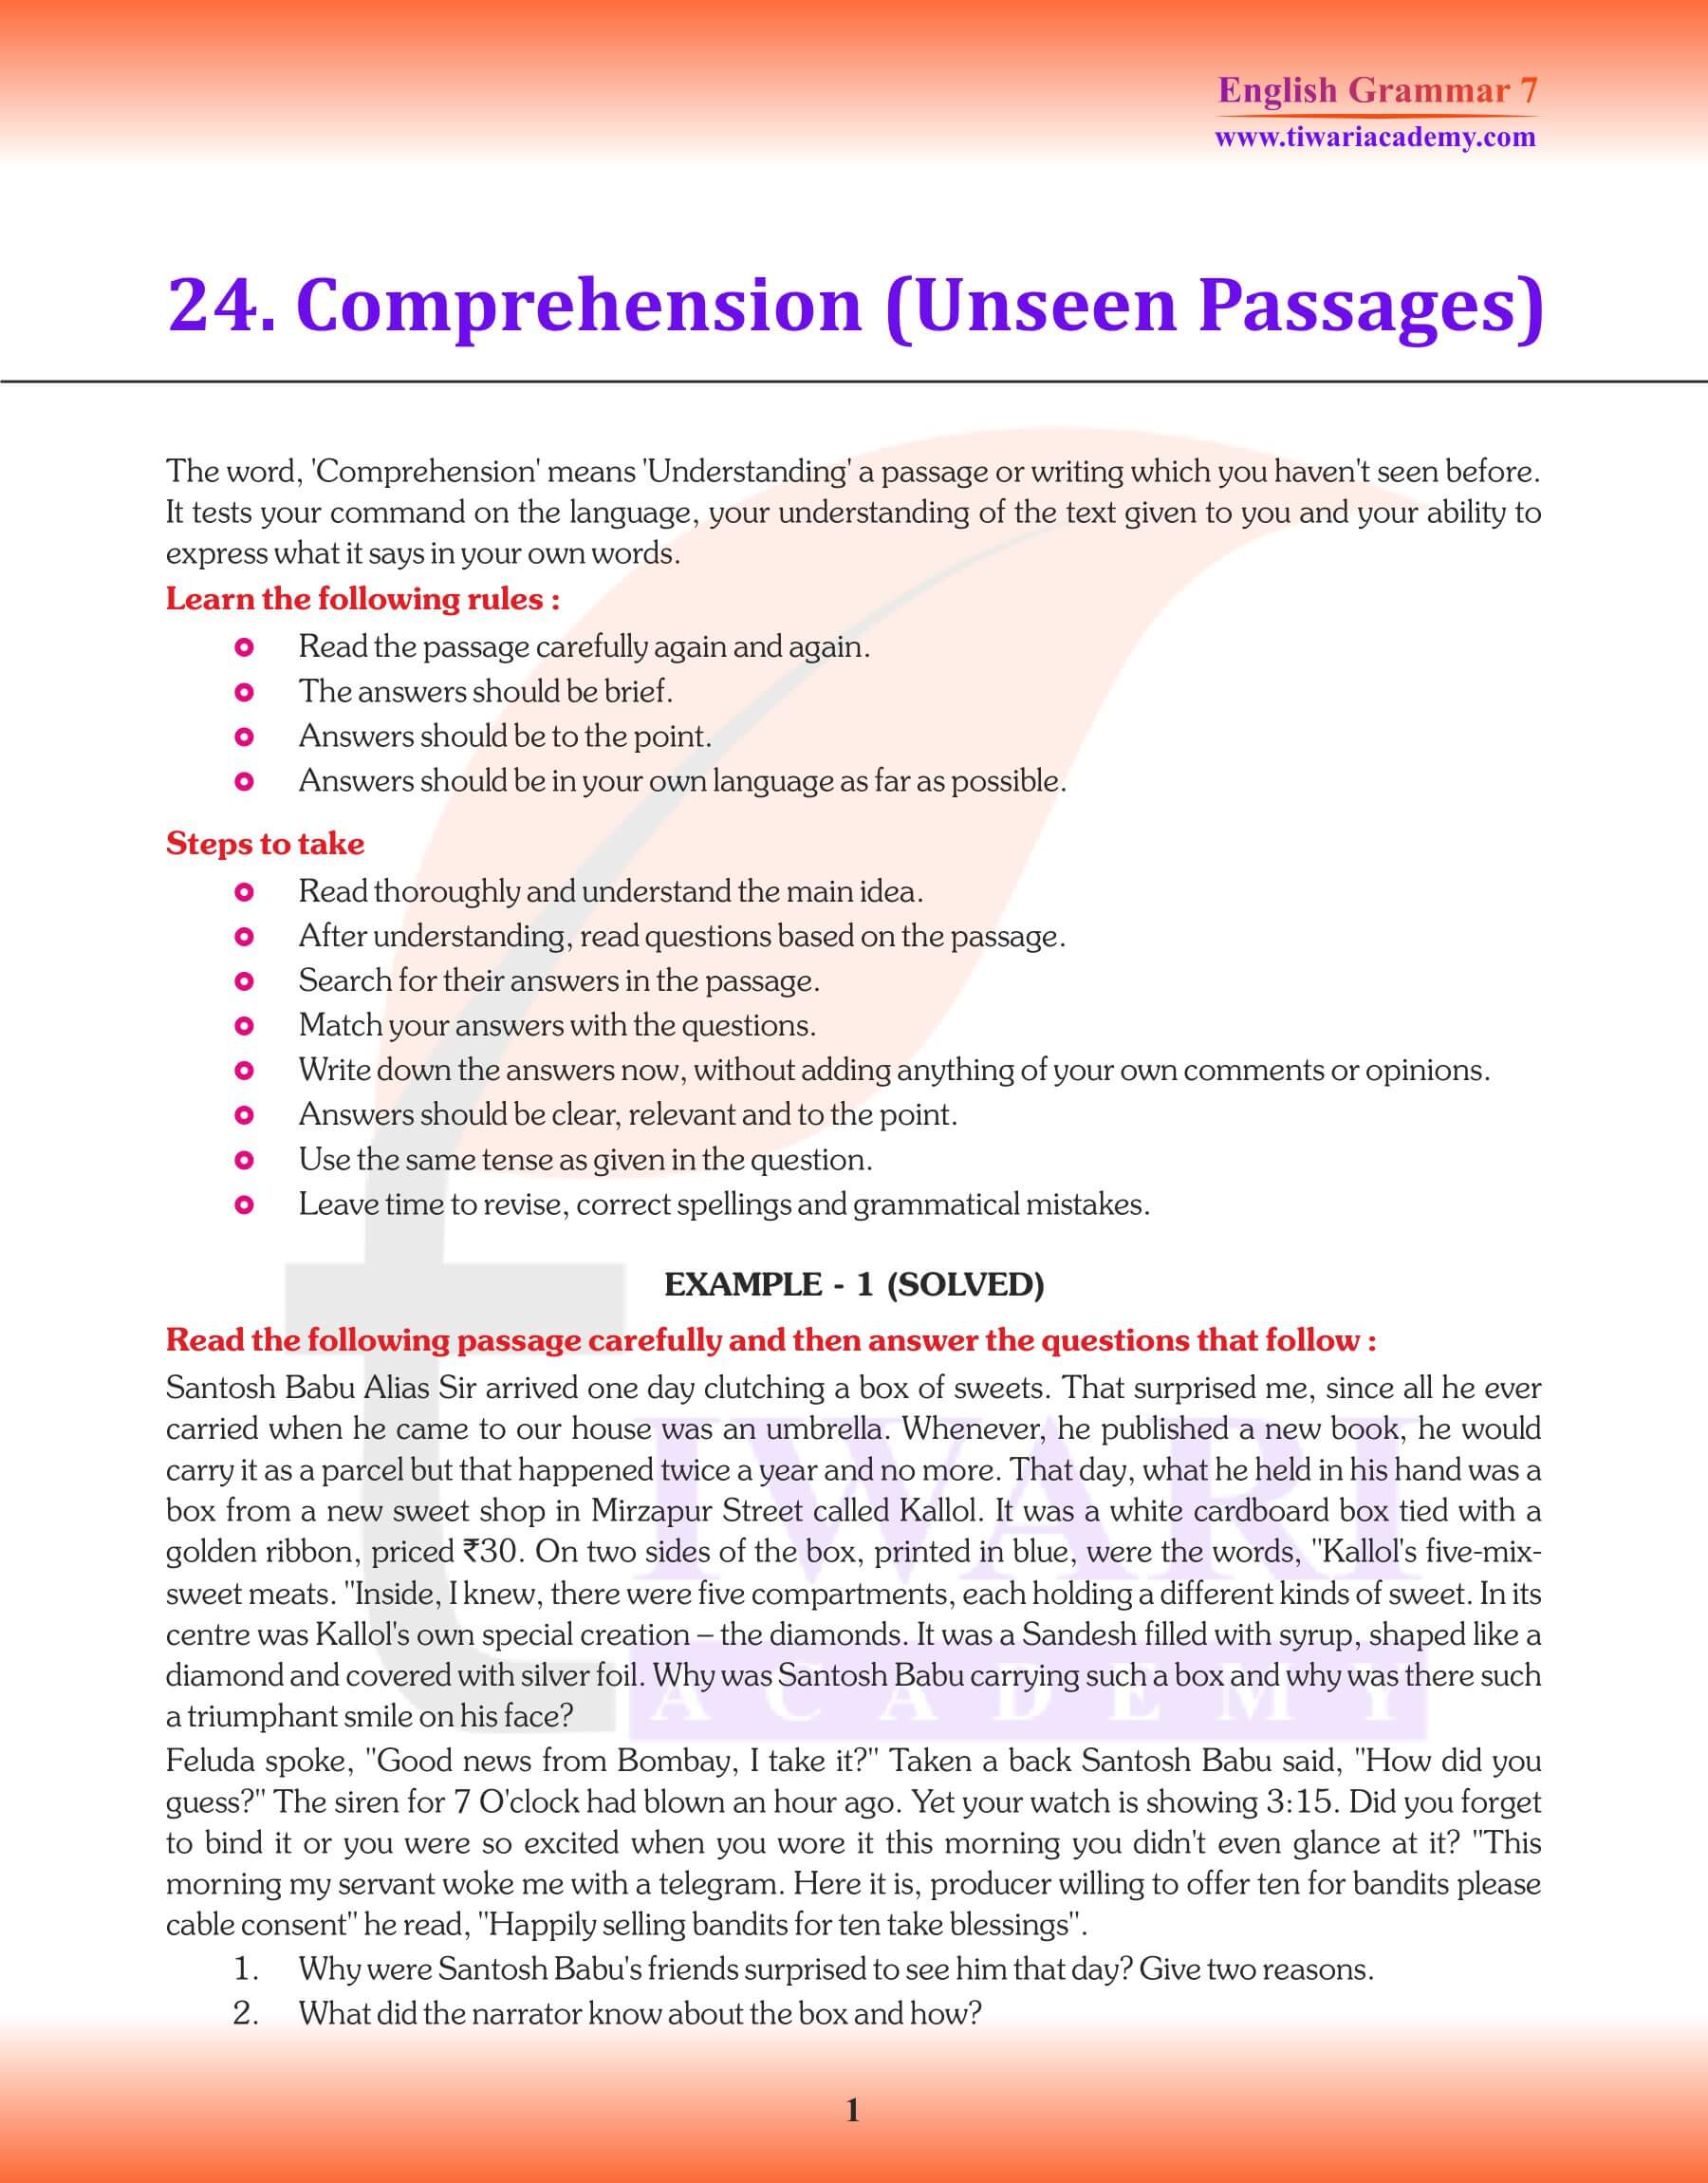 Unseen Passage Comprehension practice